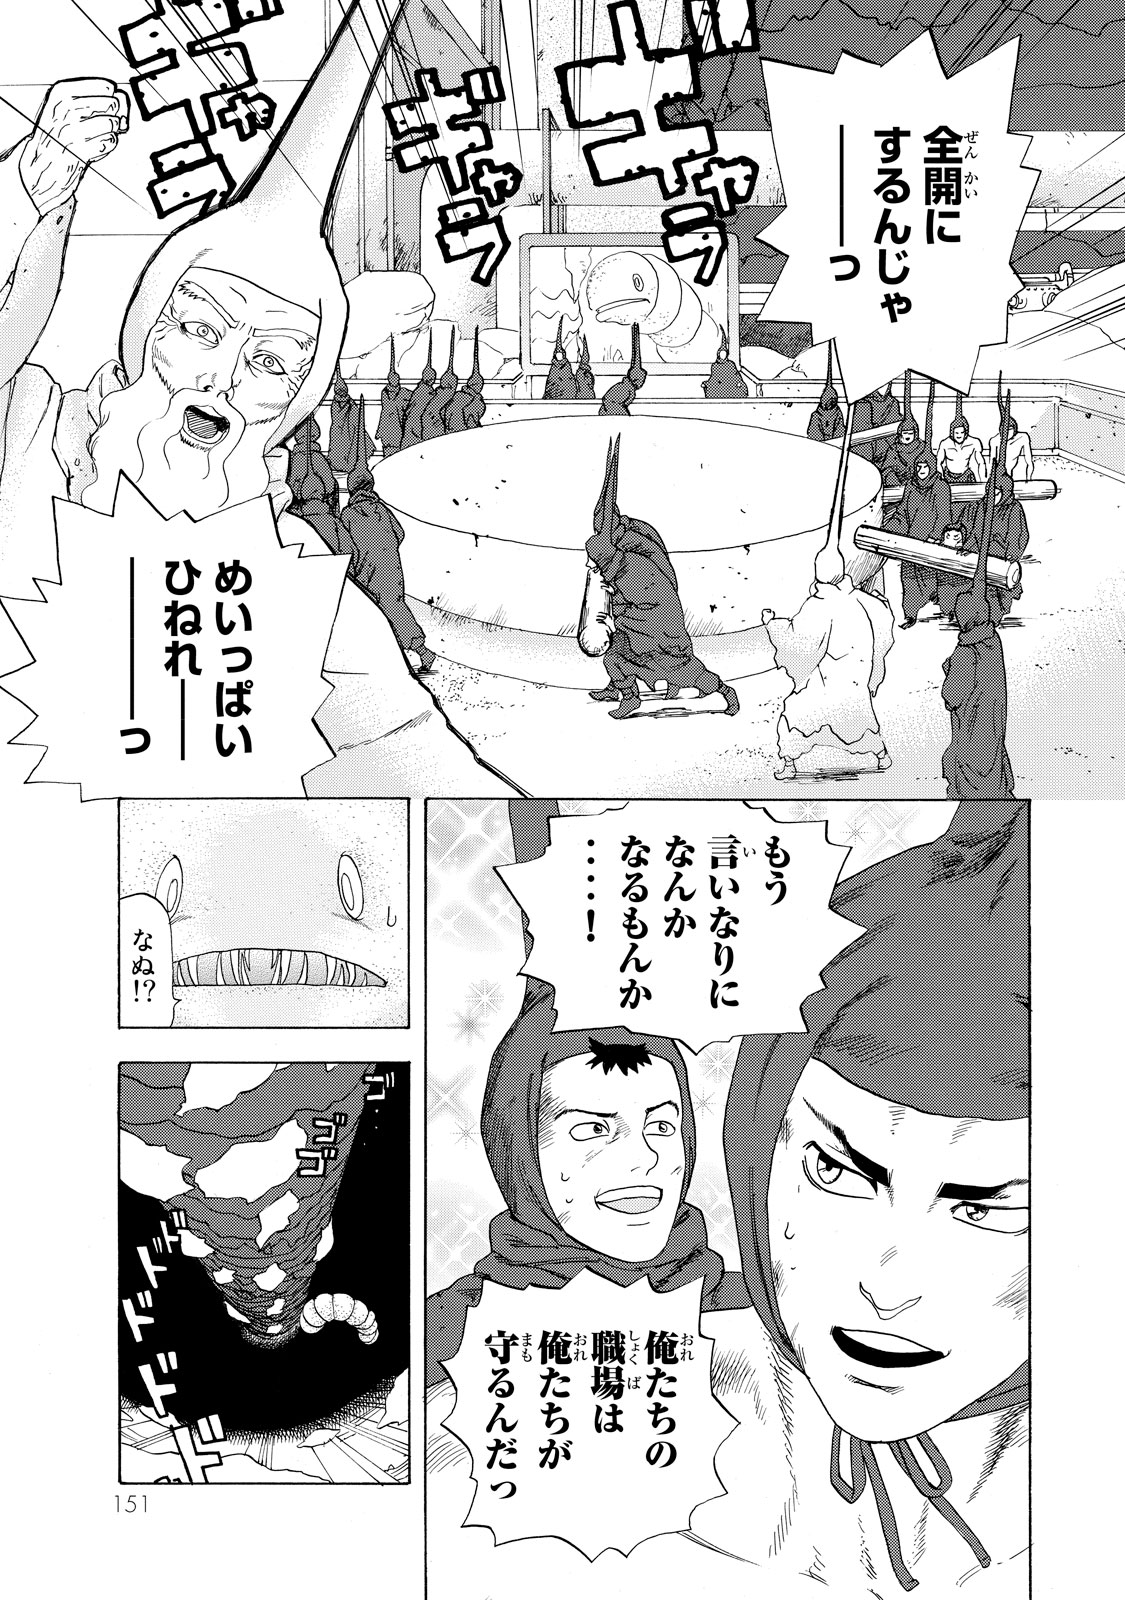 Hataraku Saibou - Chapter 14 - Page 23